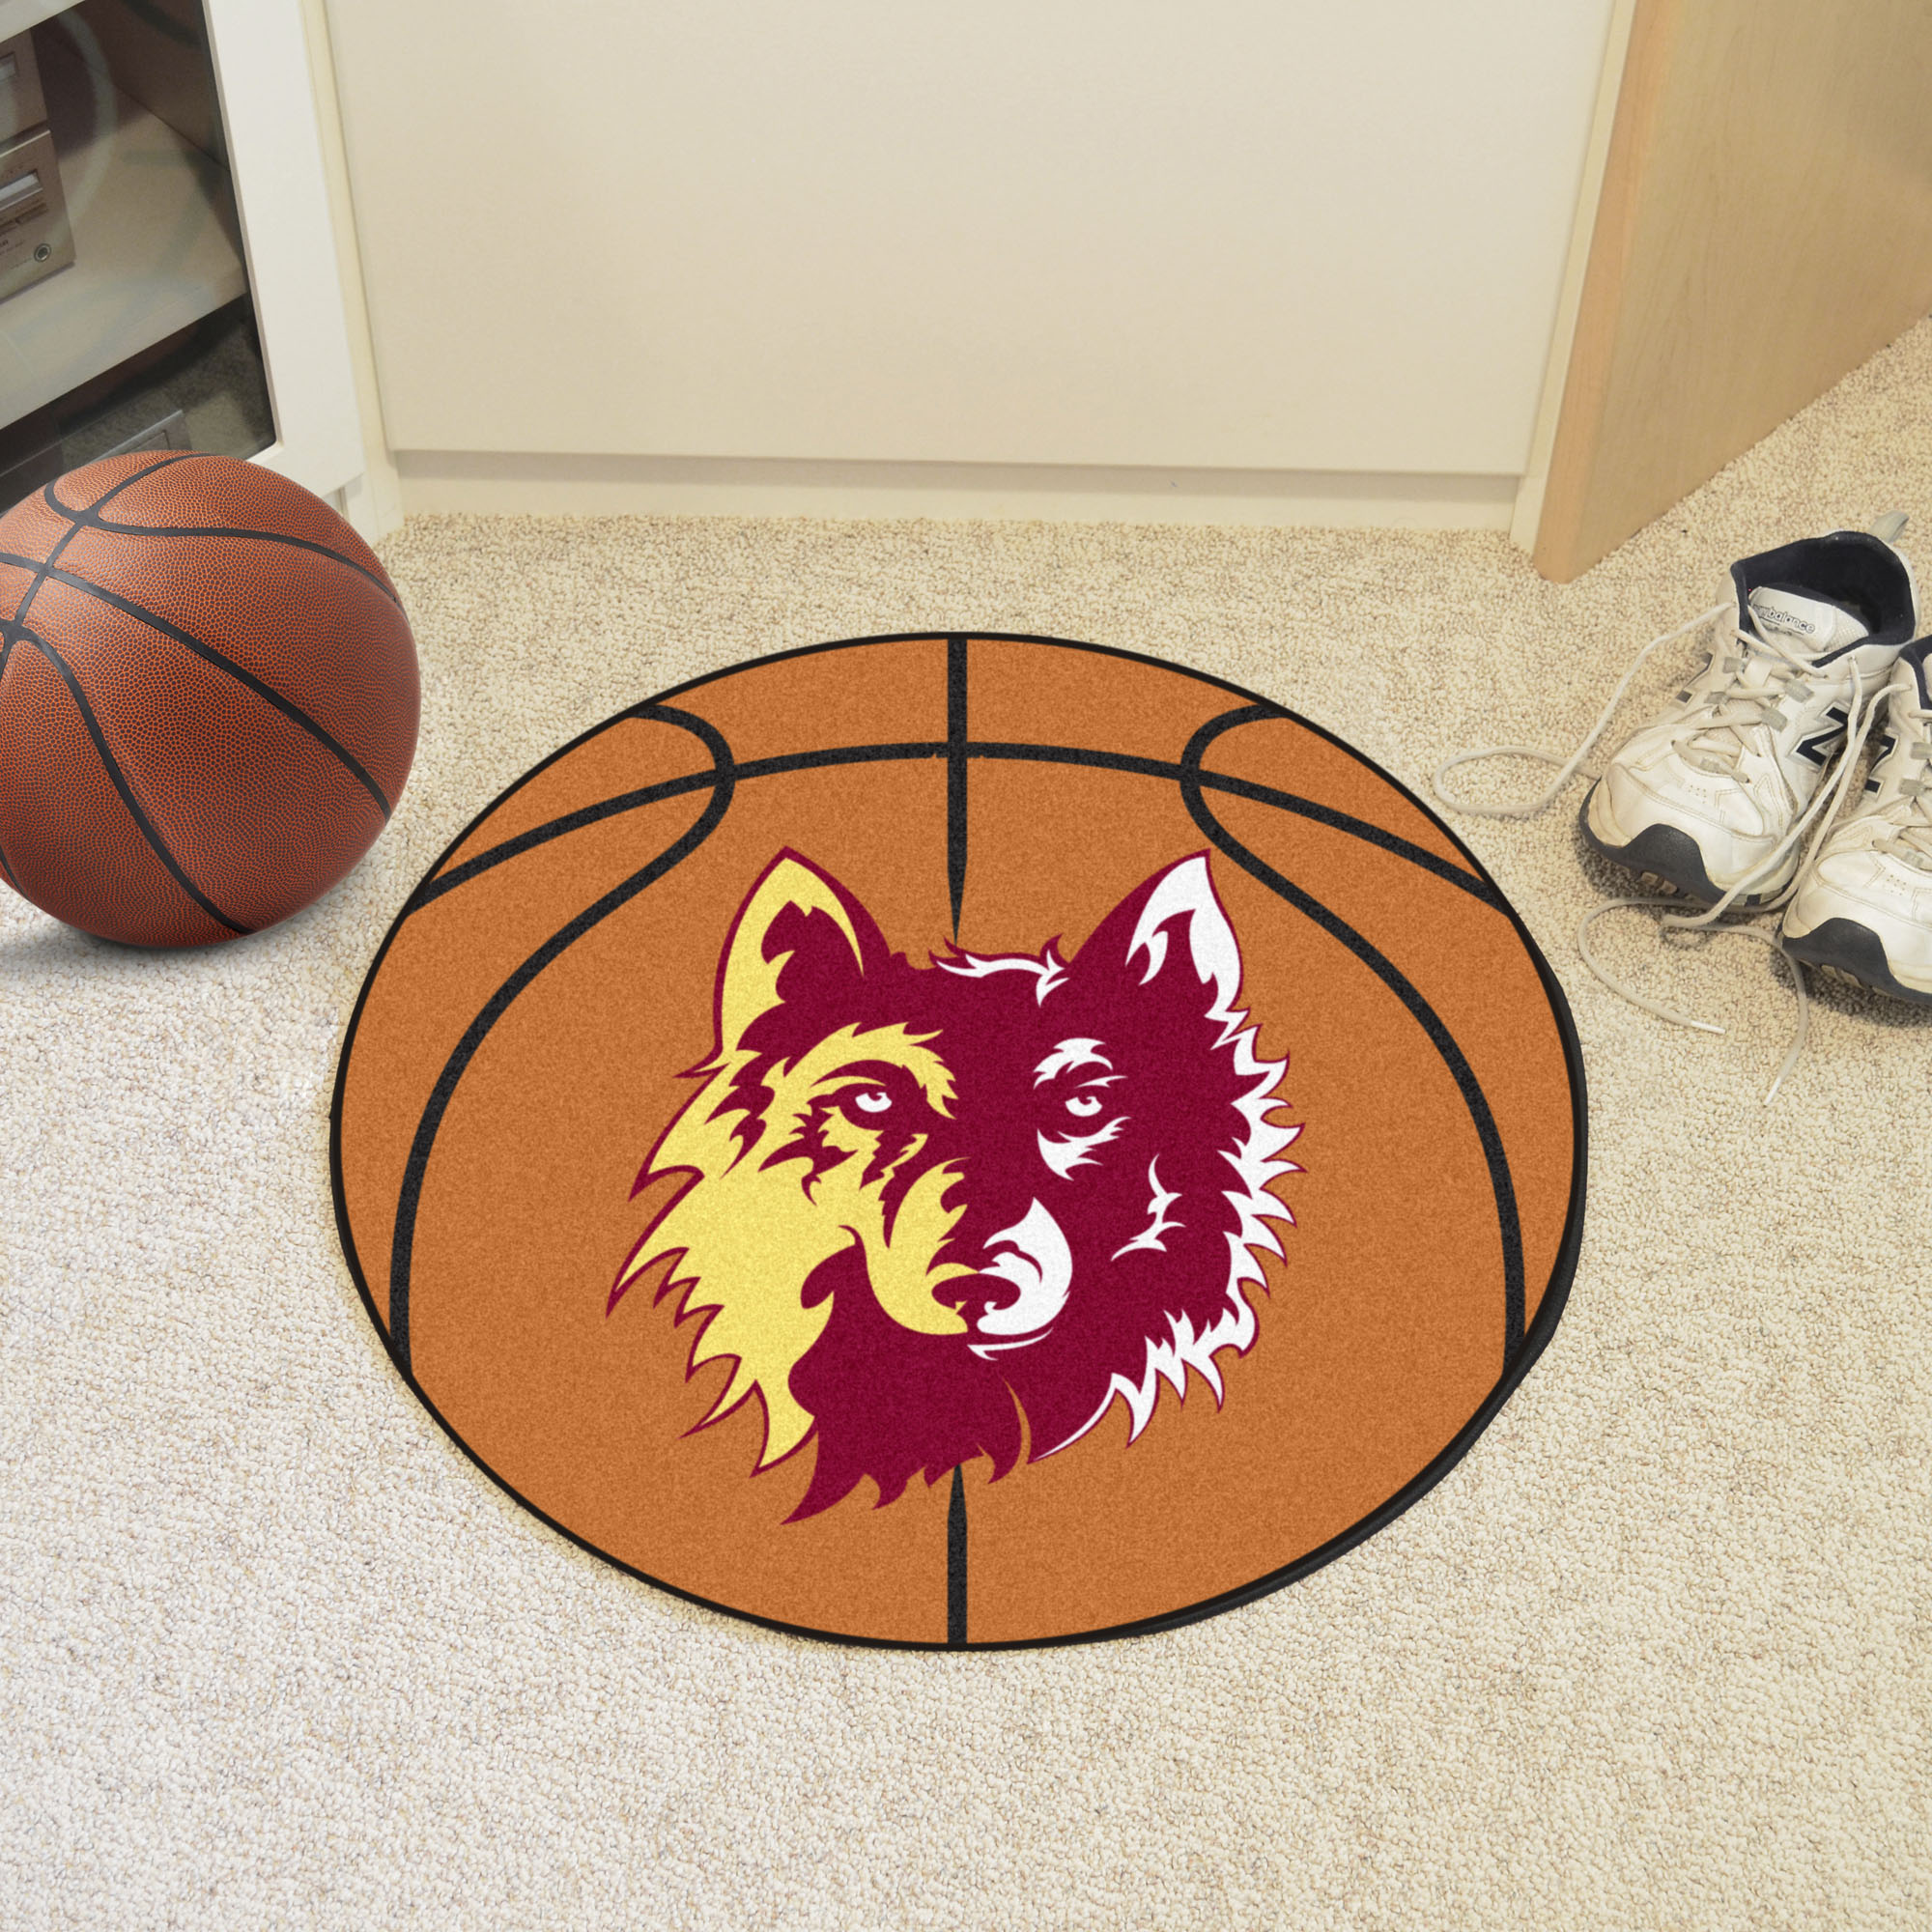 Northern State University Ball Shaped Area Rugs (Ball Shaped Area Rugs: Basketball)